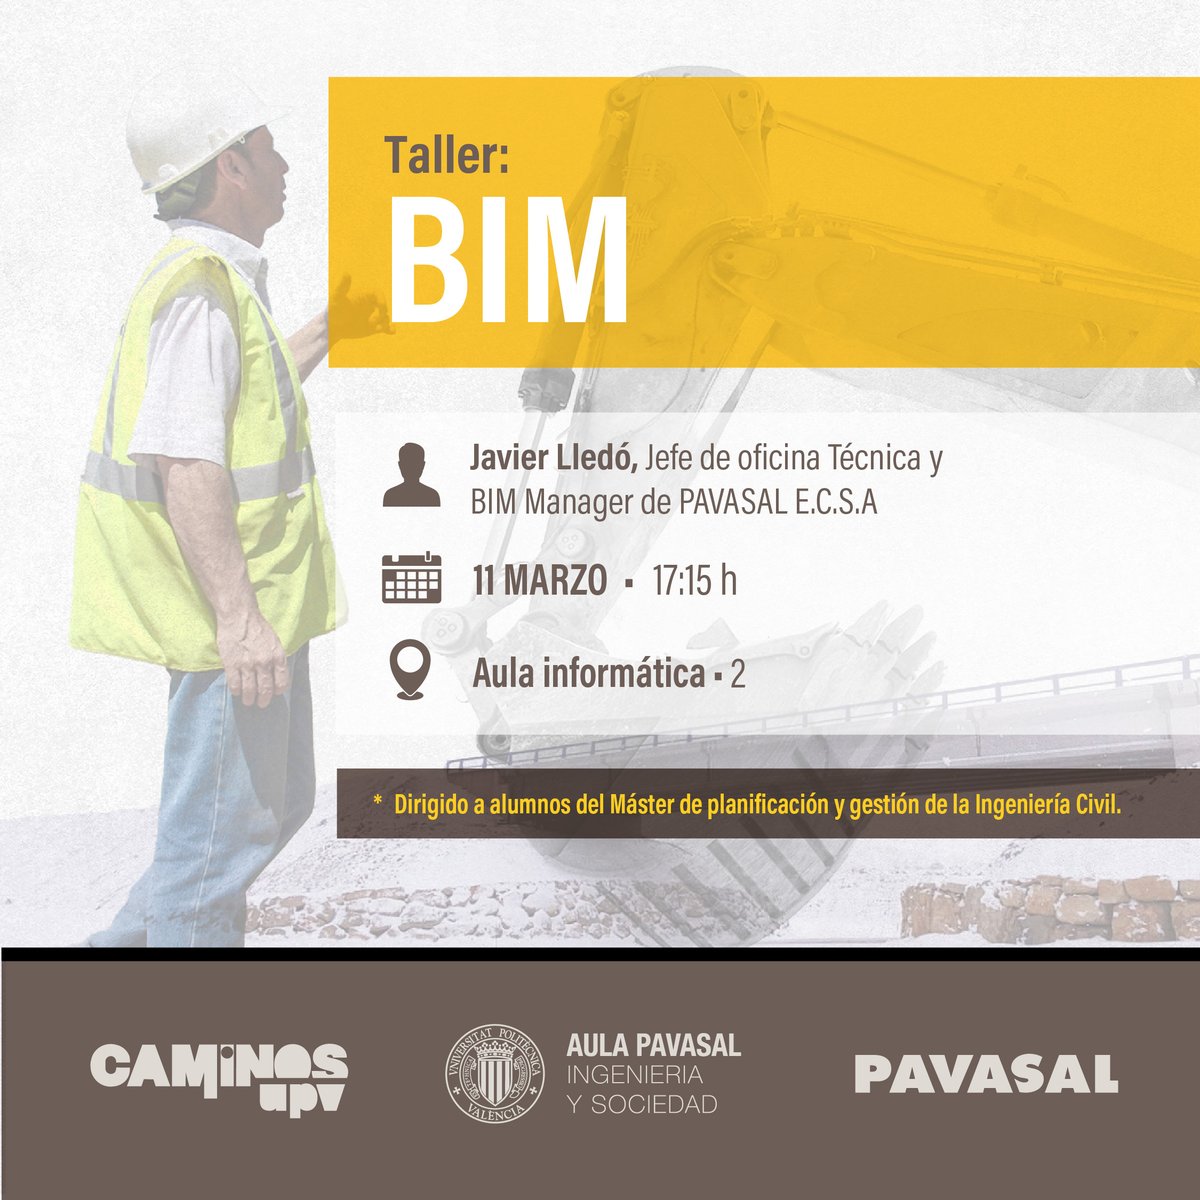 📣TALLER BIM 📆 11 de marzo 🕒 17:15h 📍 Aula informática 2 @CaminosUPV 👷Javier Lledó, Jefe de oficina técnica y BIM Manager de @PAVASAL E.C.S.A. #AulaPavasal @UPV